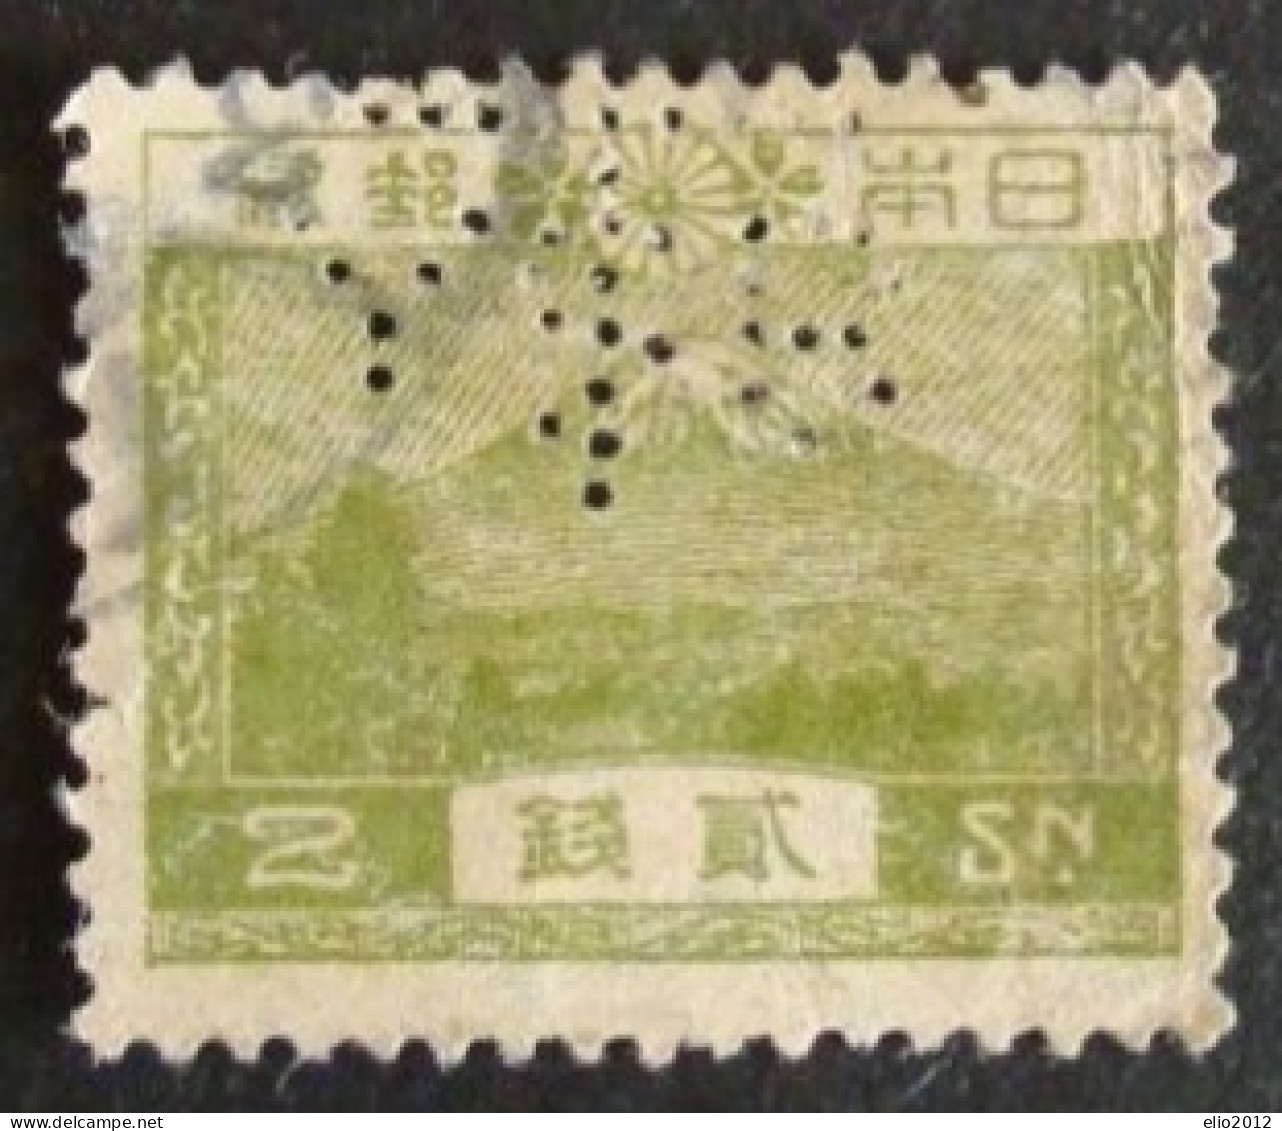 Perfin Francobollo Giappone - 1926 - 2 S - Gebraucht